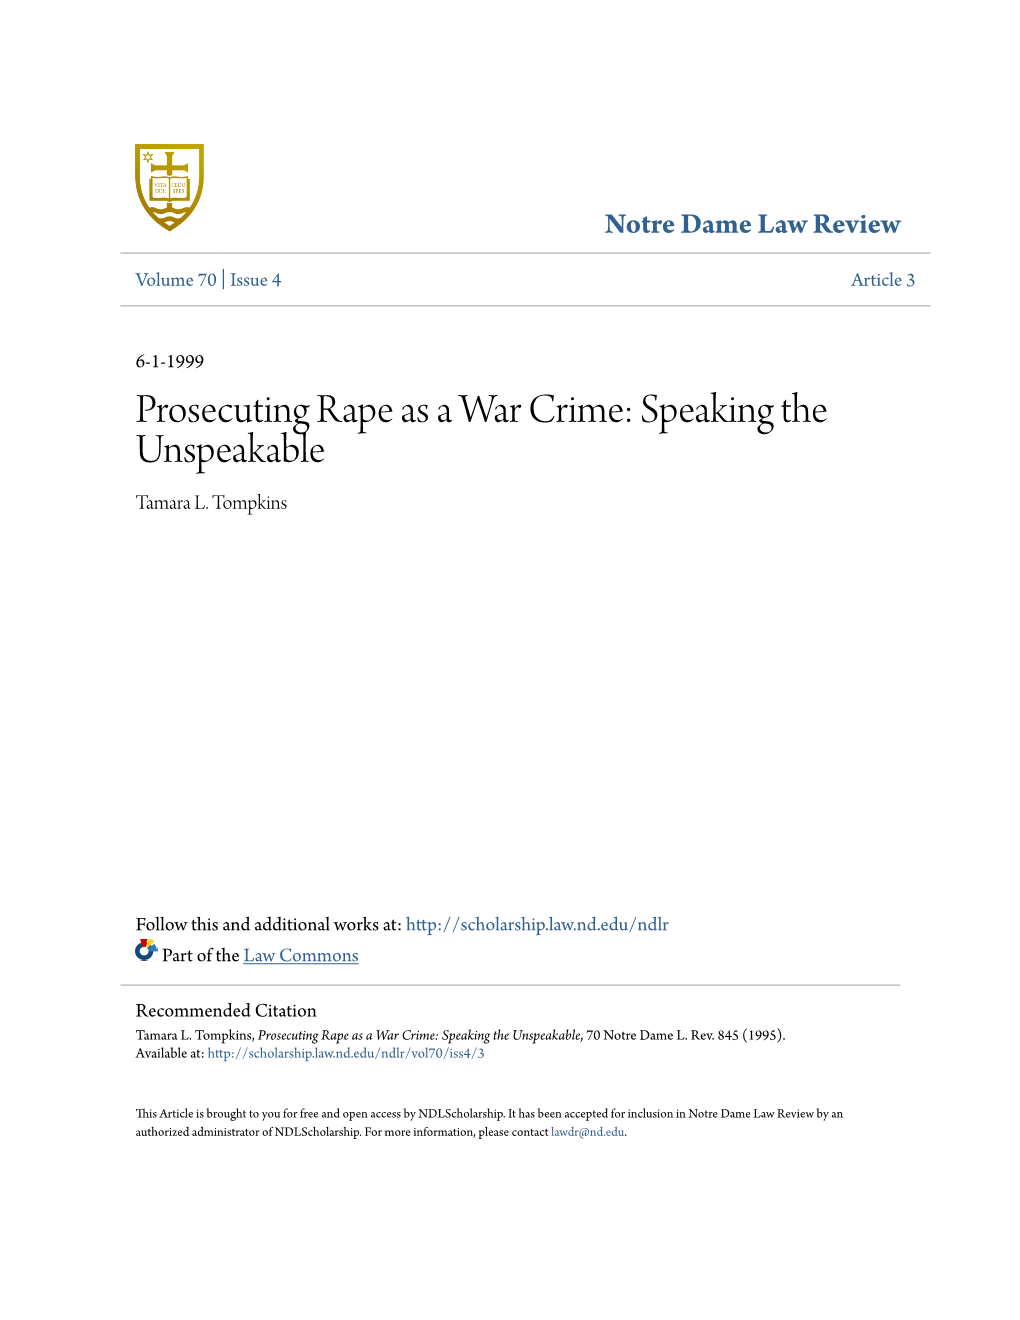 Prosecuting Rape As a War Crime: Speaking the Unspeakable Tamara L